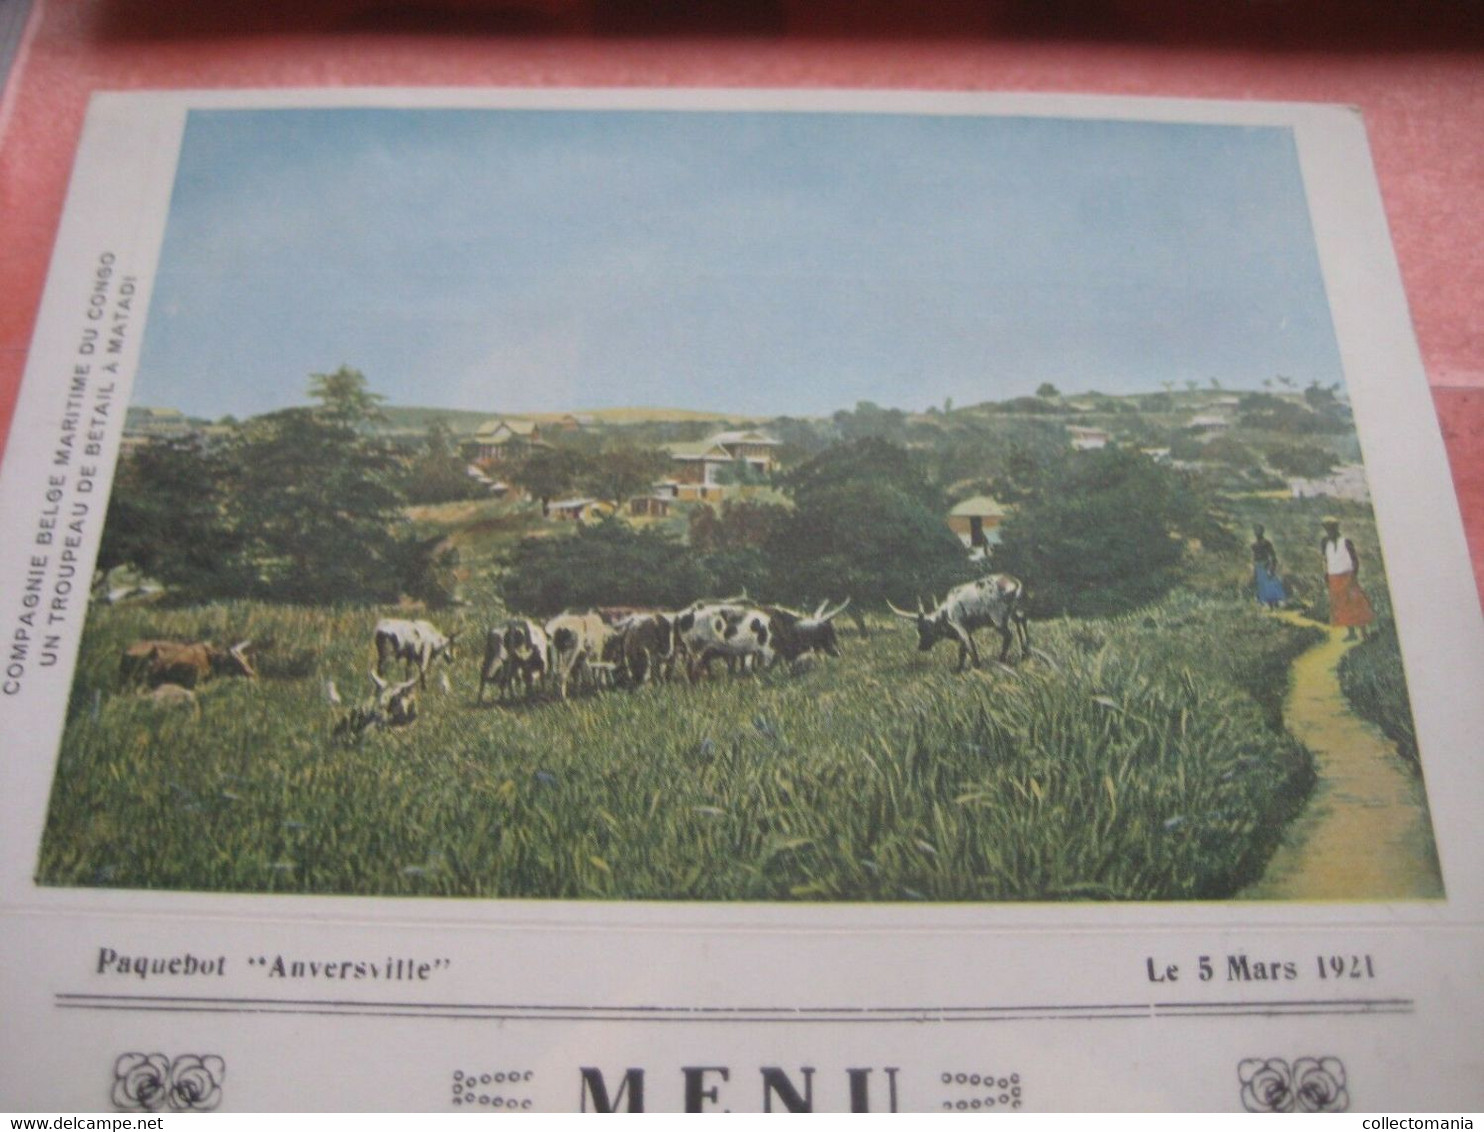 Authentic Menu Card, 1921 Congo Boat ANVERSVILLE, 20cmX13,8cm, MATADI Cows VG -  5 March 1921   DEJEUNER = Breakfast - Menus